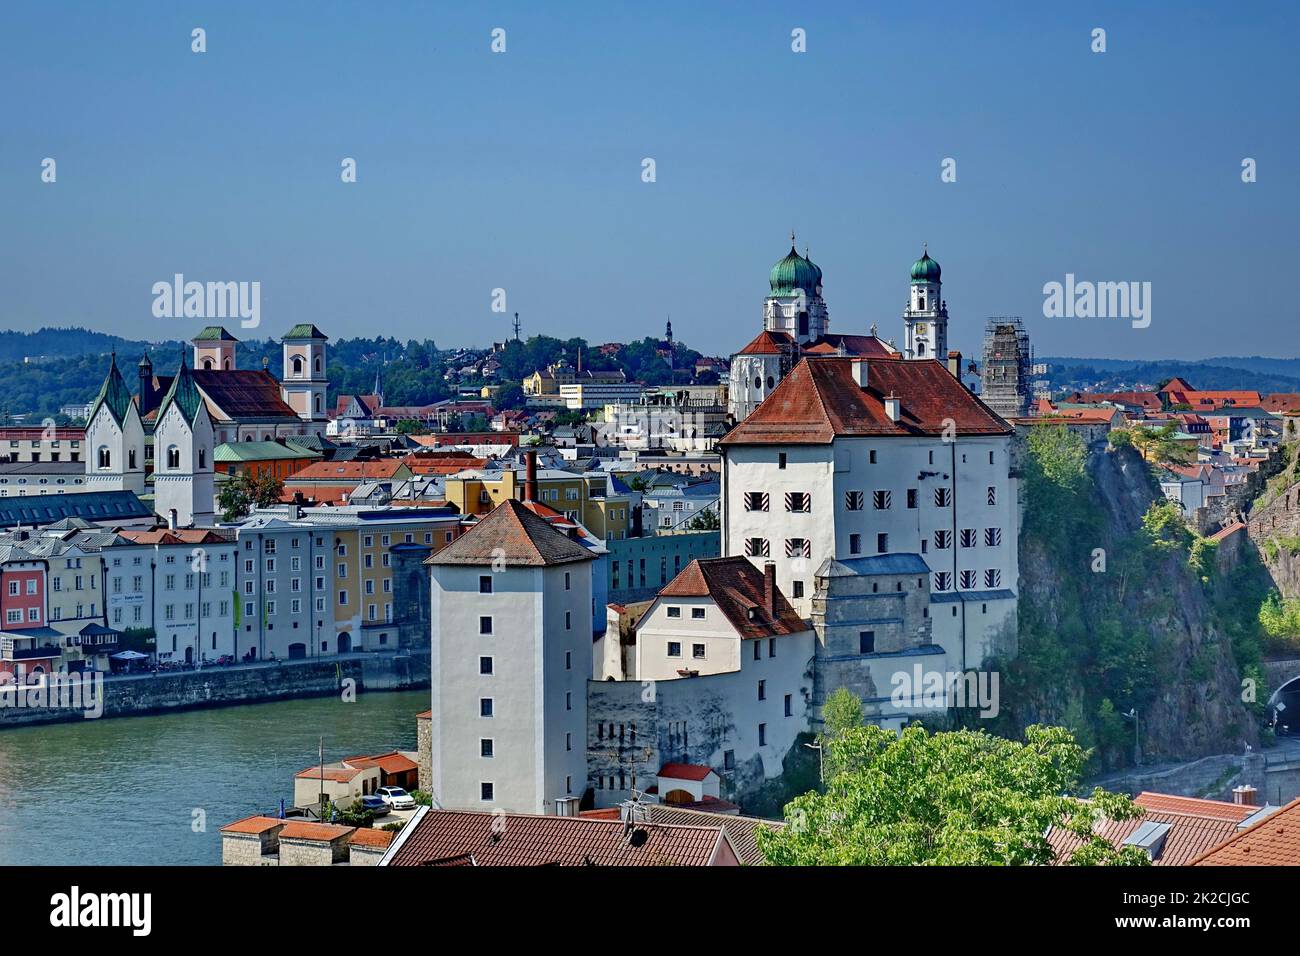 Bavaria, Lower Bavaria, Passau, City of three rivers, Veste Niederhaus, Danube, geography, tourism Stock Photo